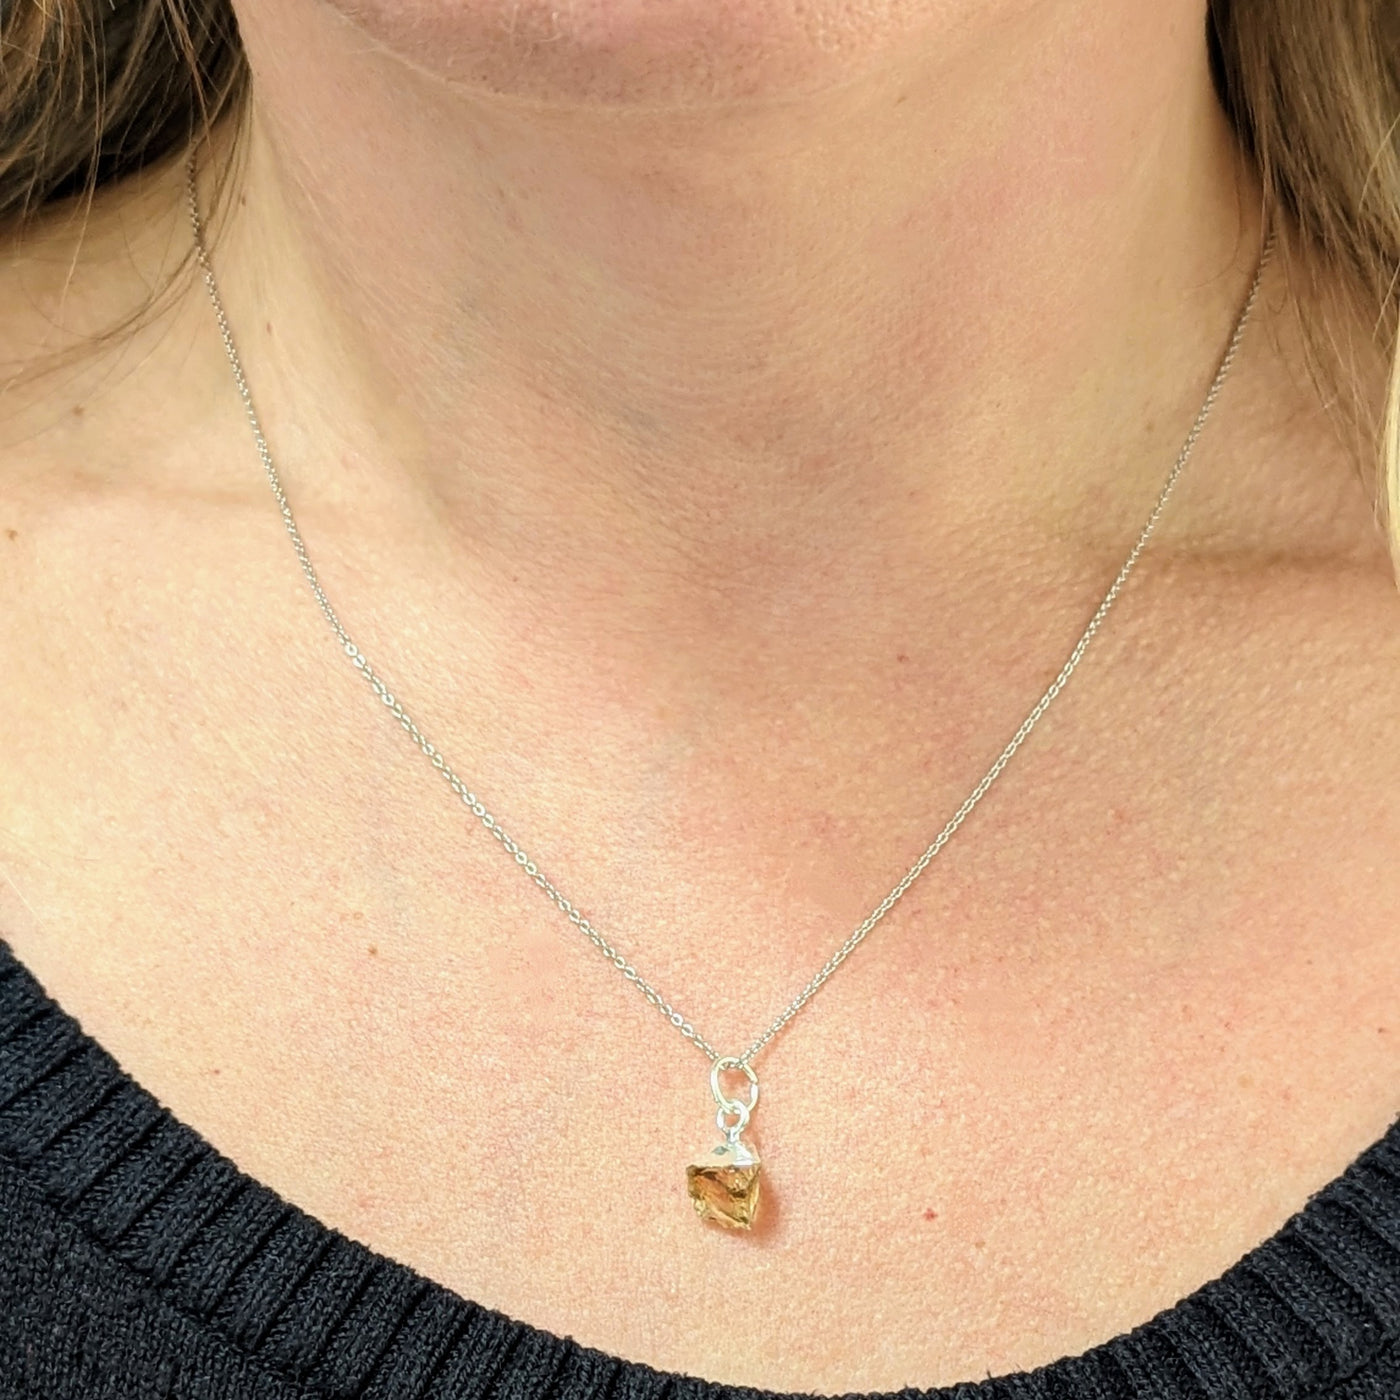 Citrine November birthstone necklace